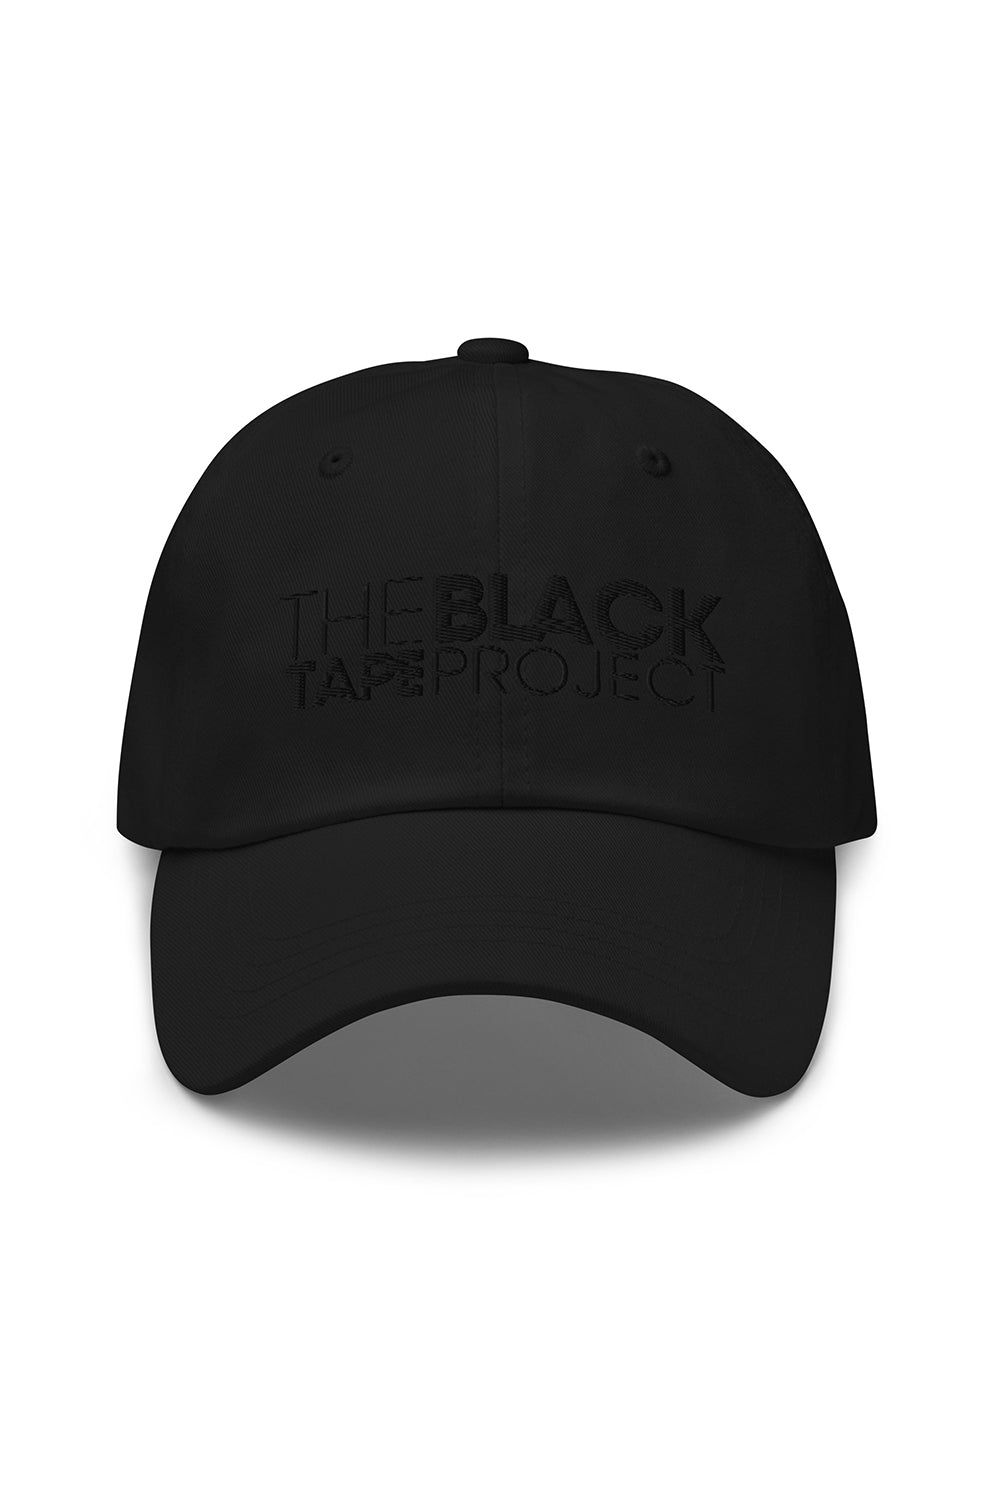 Black Tape Project Dad Hat - Black Tape Project